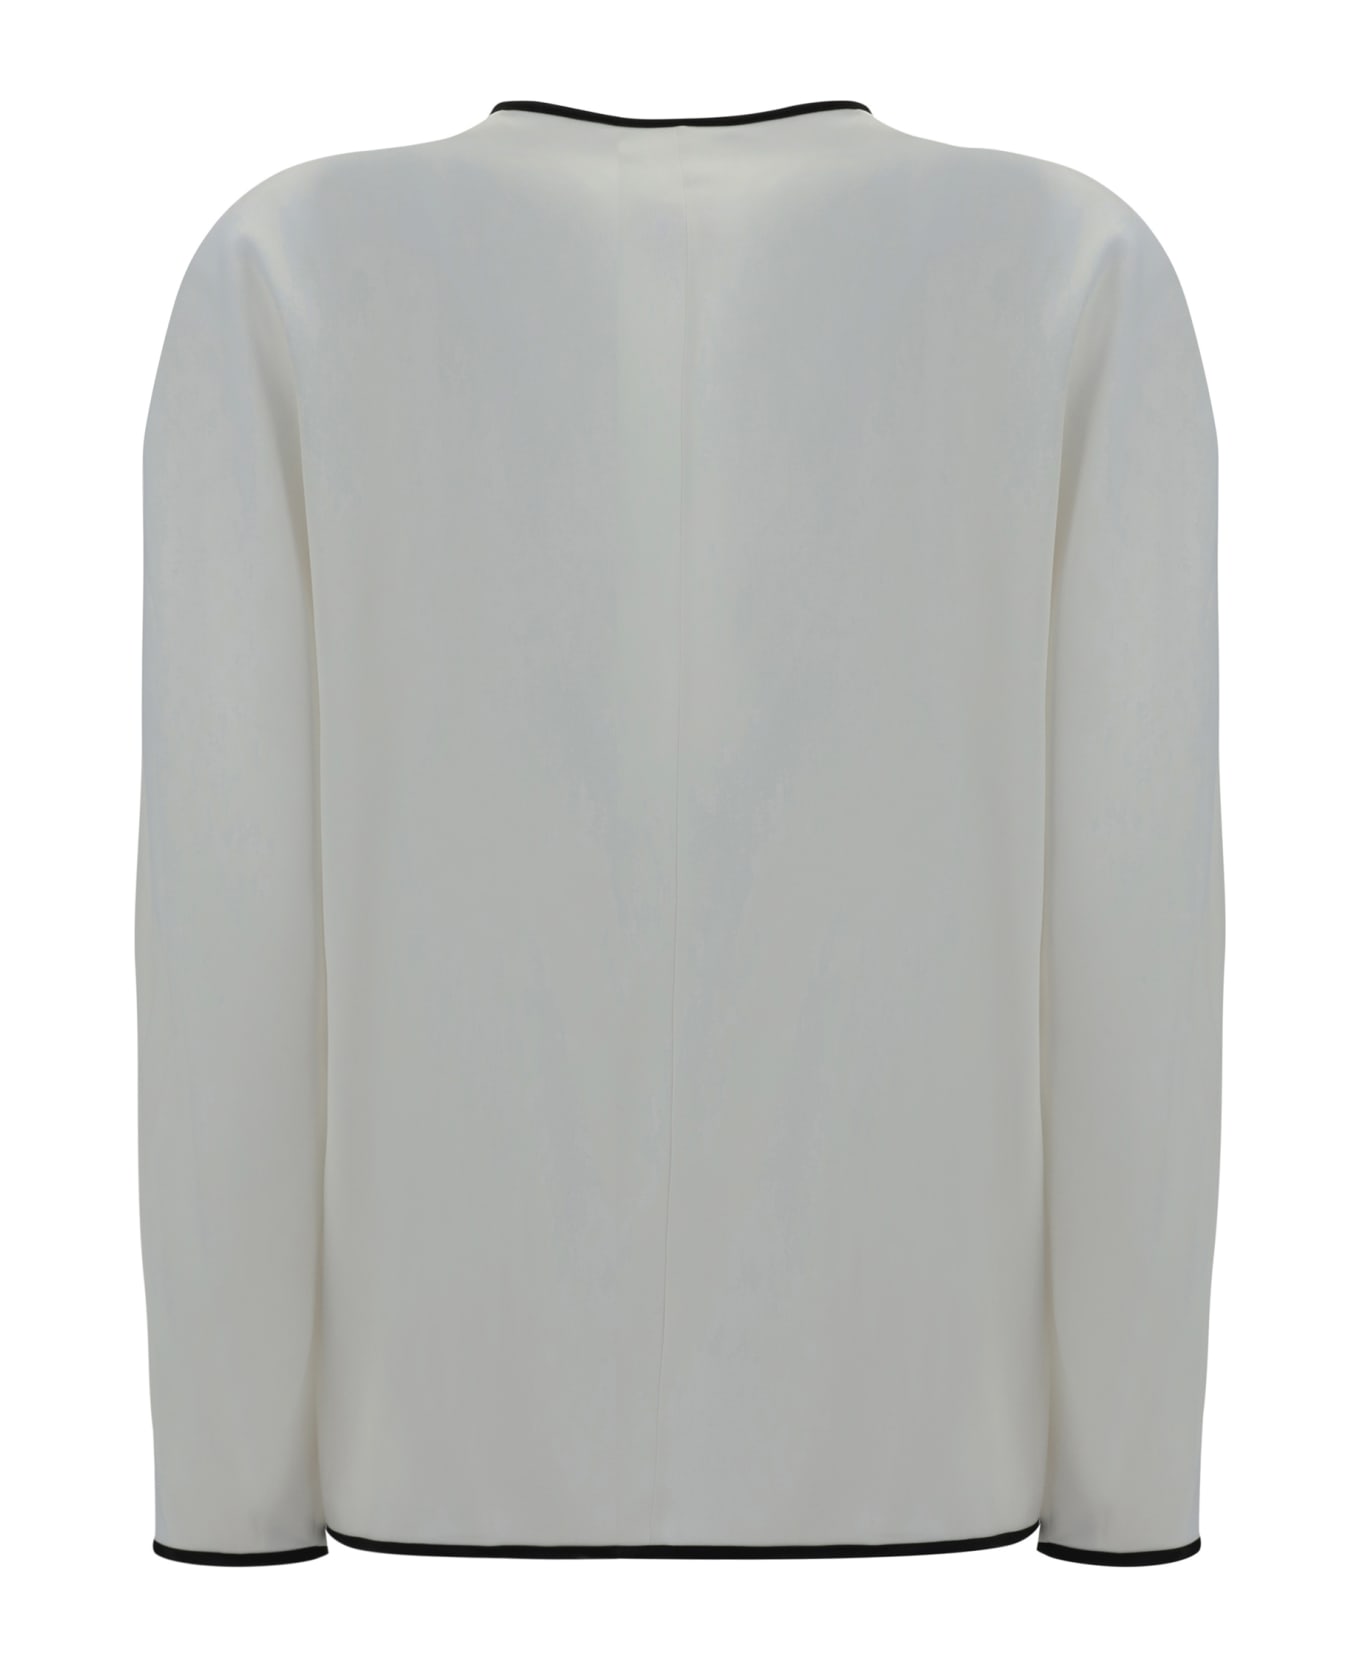 Giorgio Armani Shirt - Brilliant White